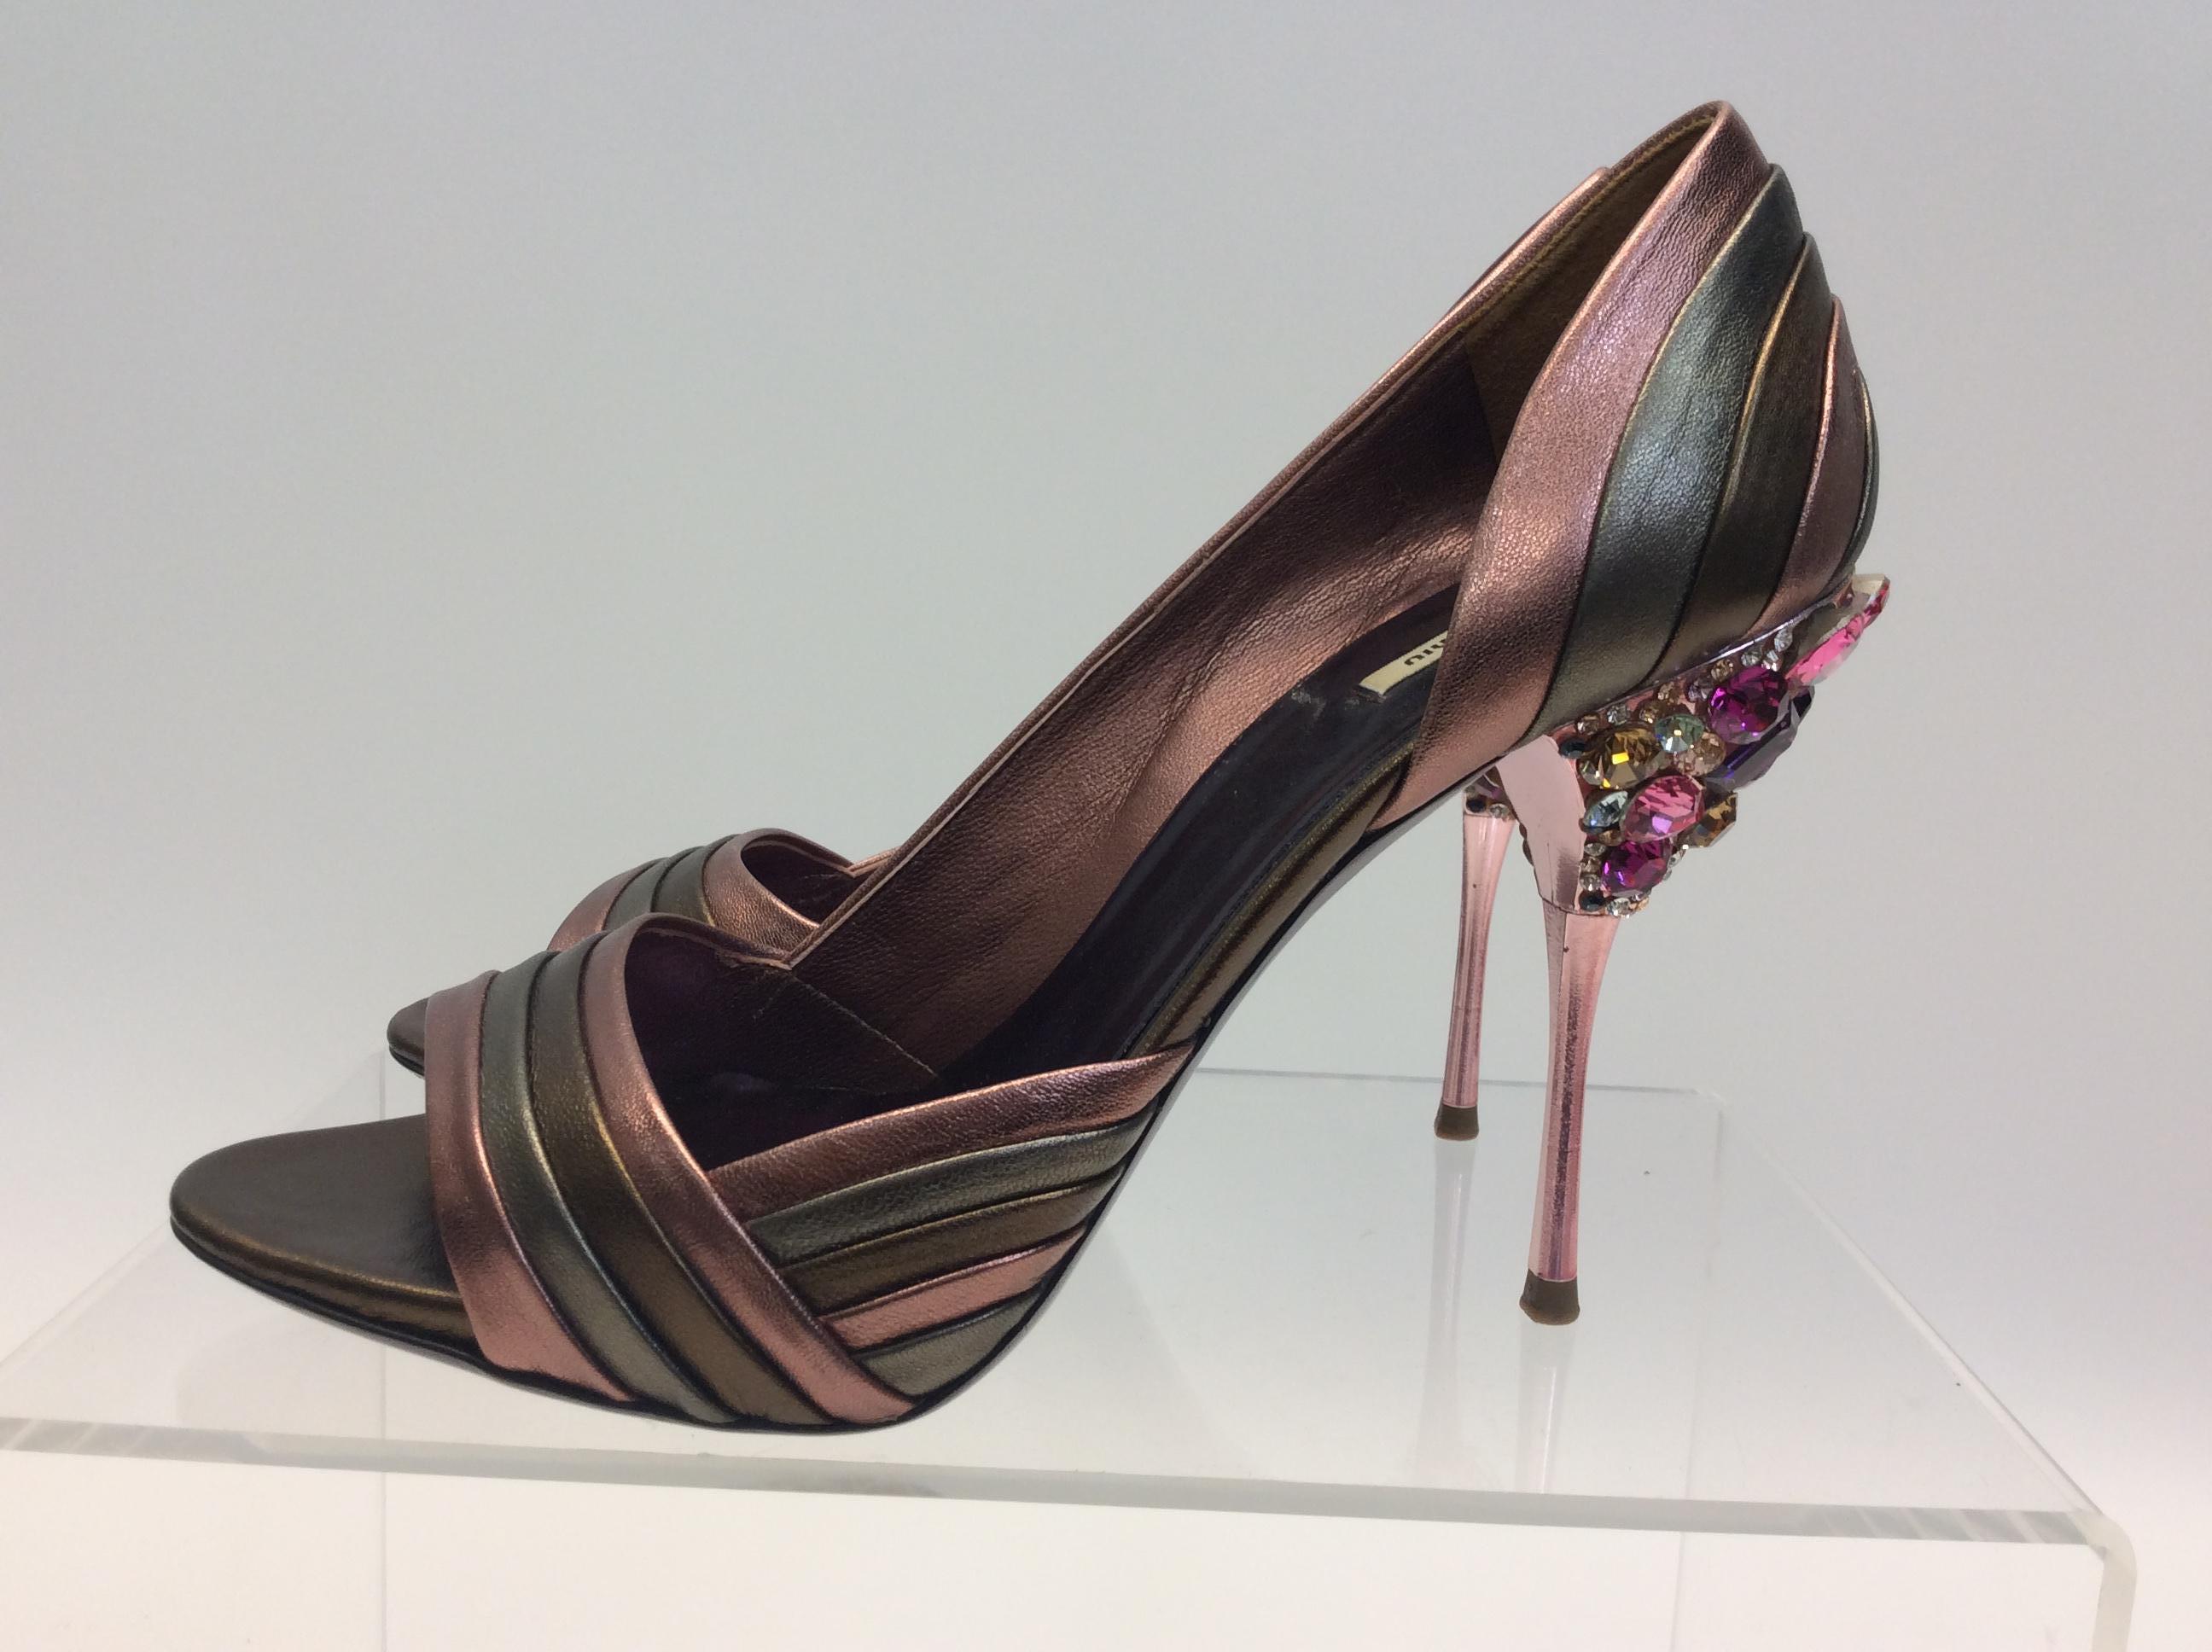 Miu Miu Pink Metallic Heel with Jewel Heel Accent
$225
Made in Italy
Leather
Size 37.5
4